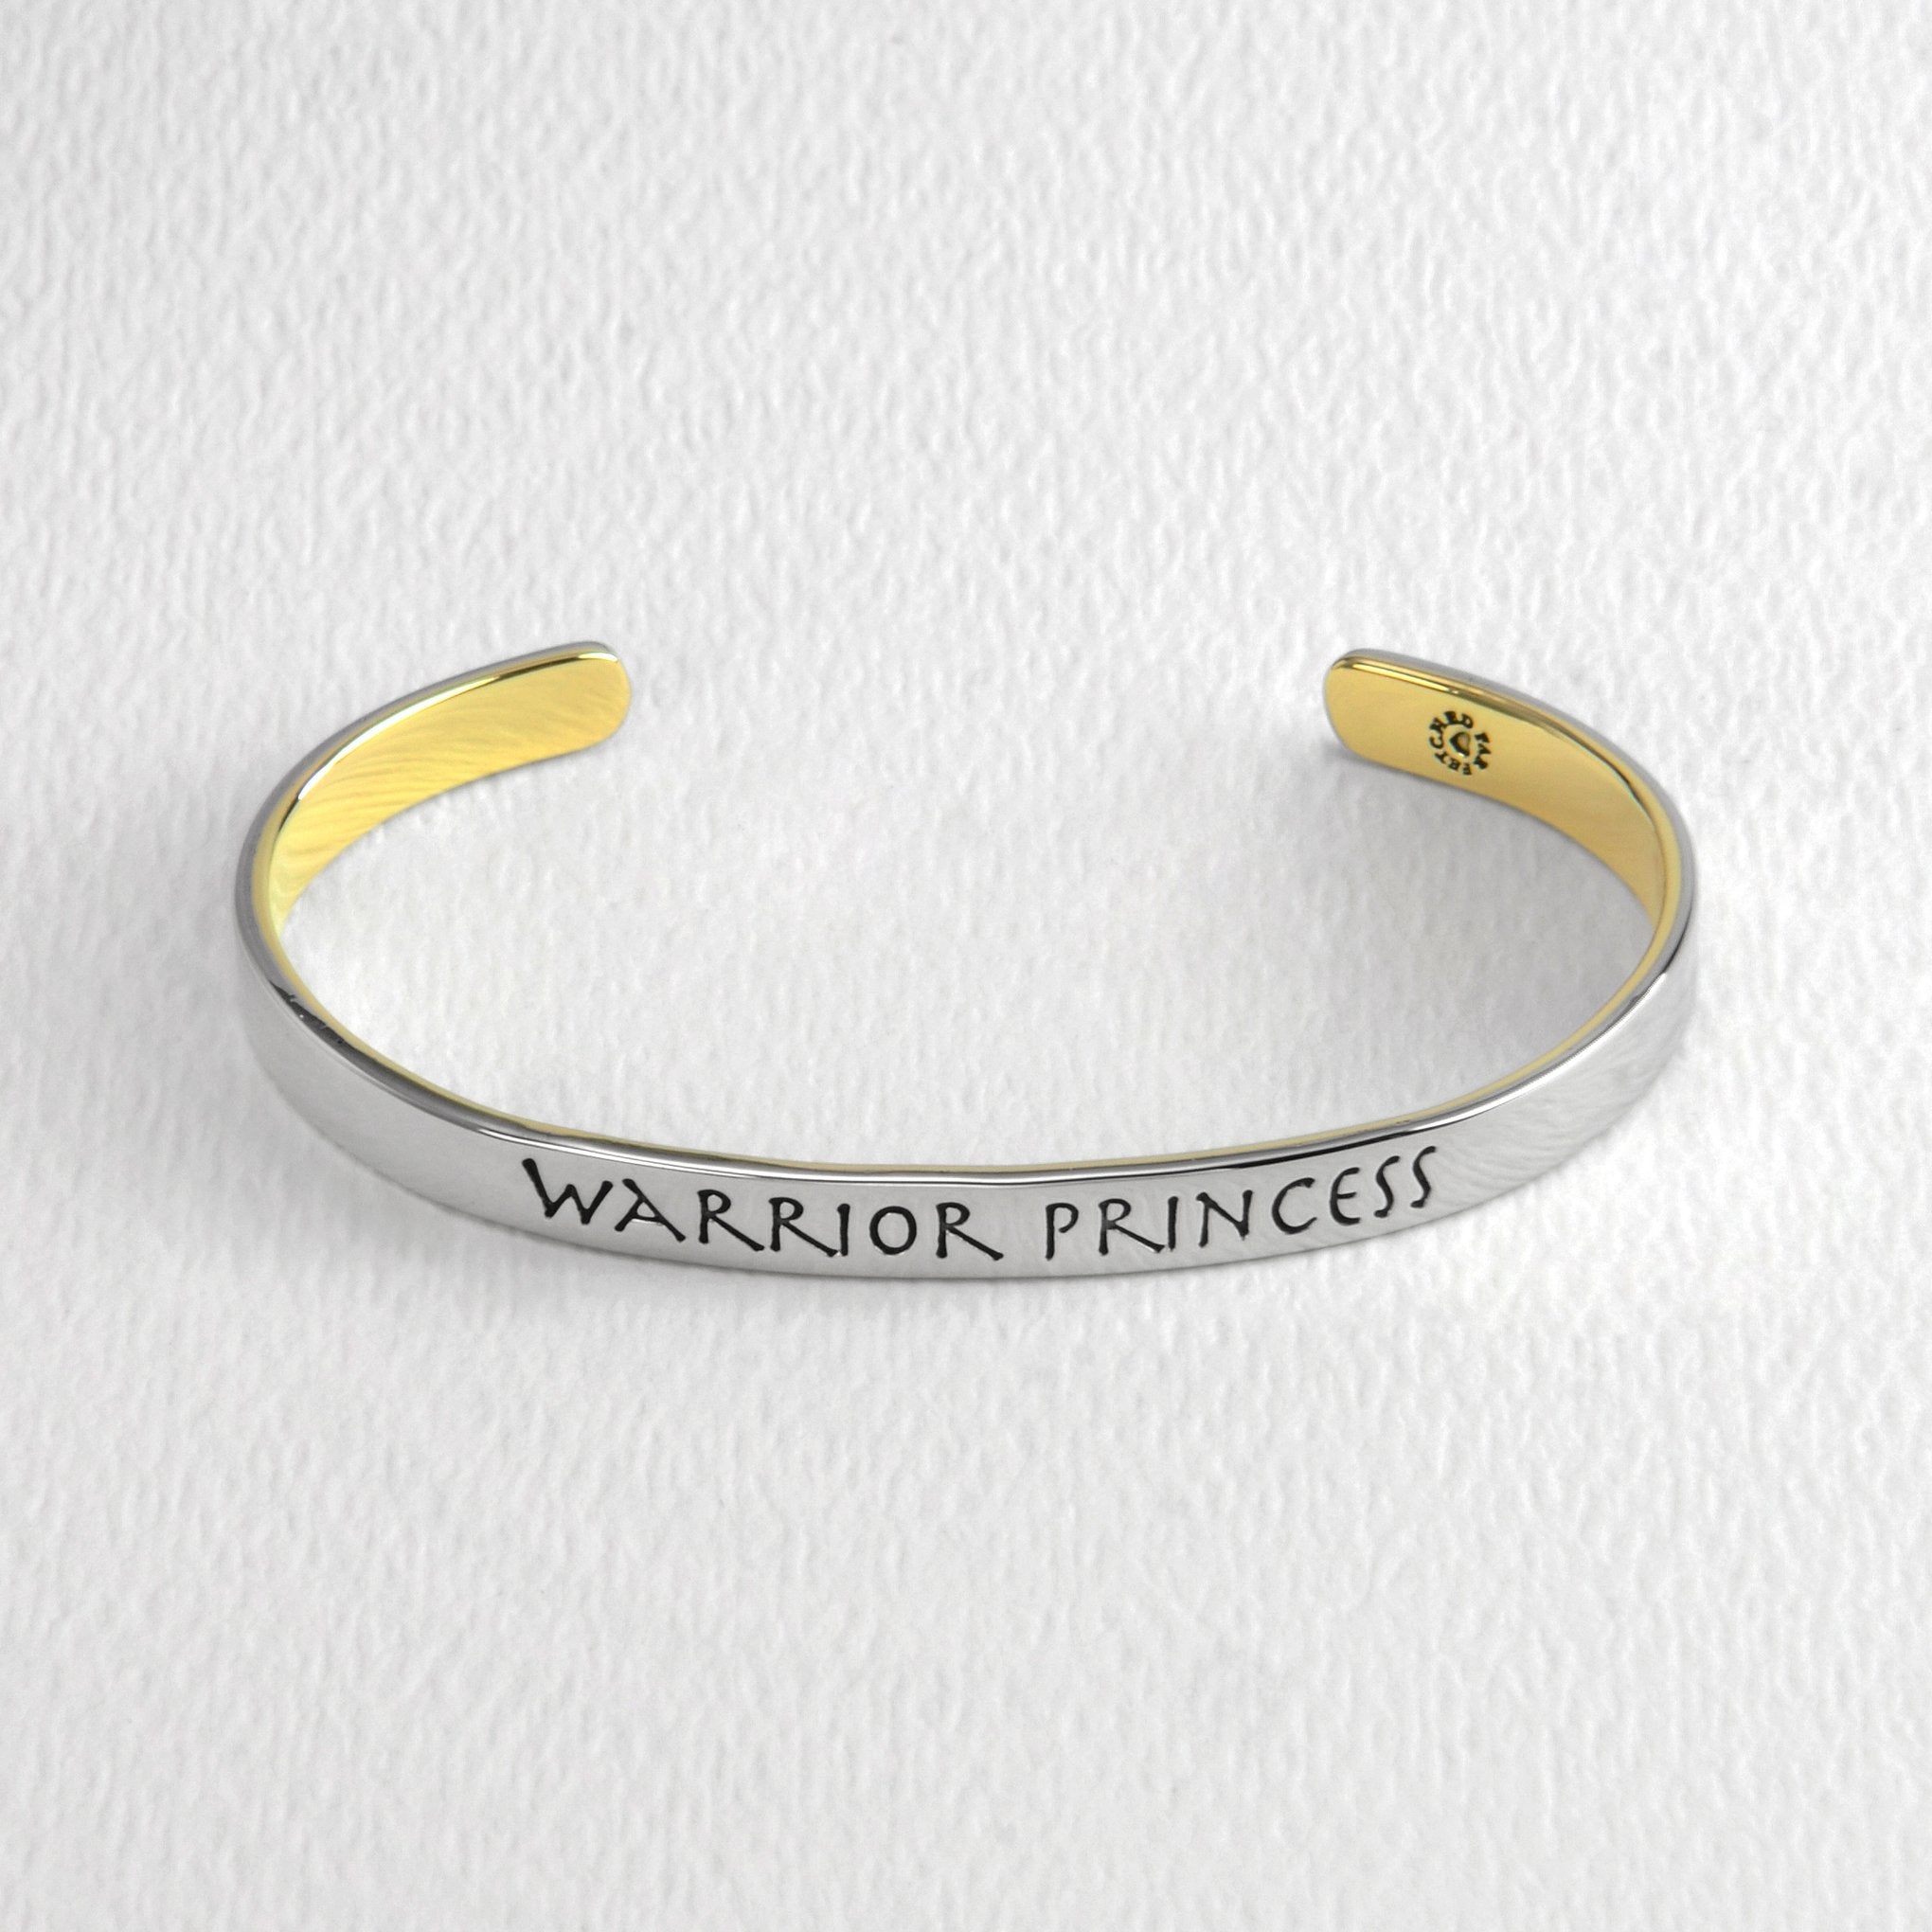 Warrior Princess Mixed Metals Cuff Bracelet